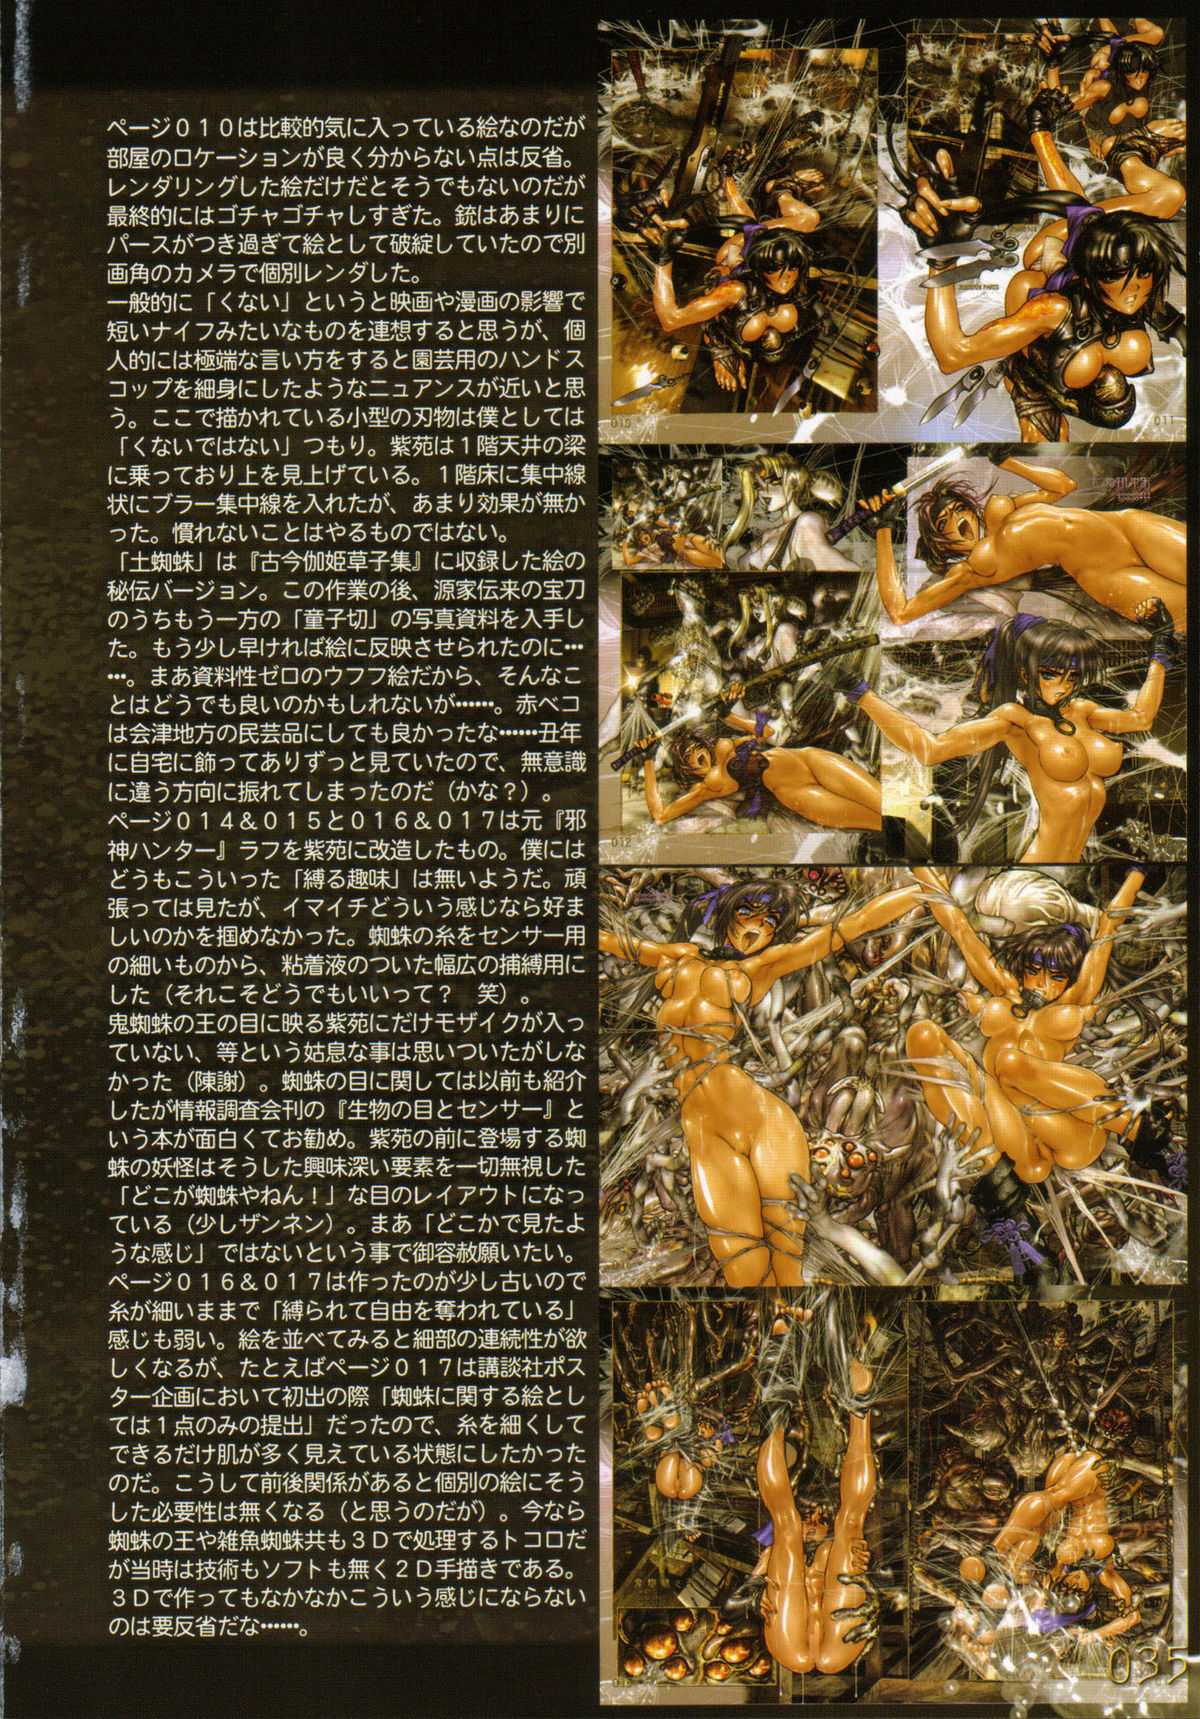 [Masamune Shirow] PIECES 7 HELL HOUND 01&amp;02 Sagyousakkai + &alpha; [士郎正宗] PIECES 7 HELL HOUND 01&amp;02 作業雑記+&alpha; [11-08-22]